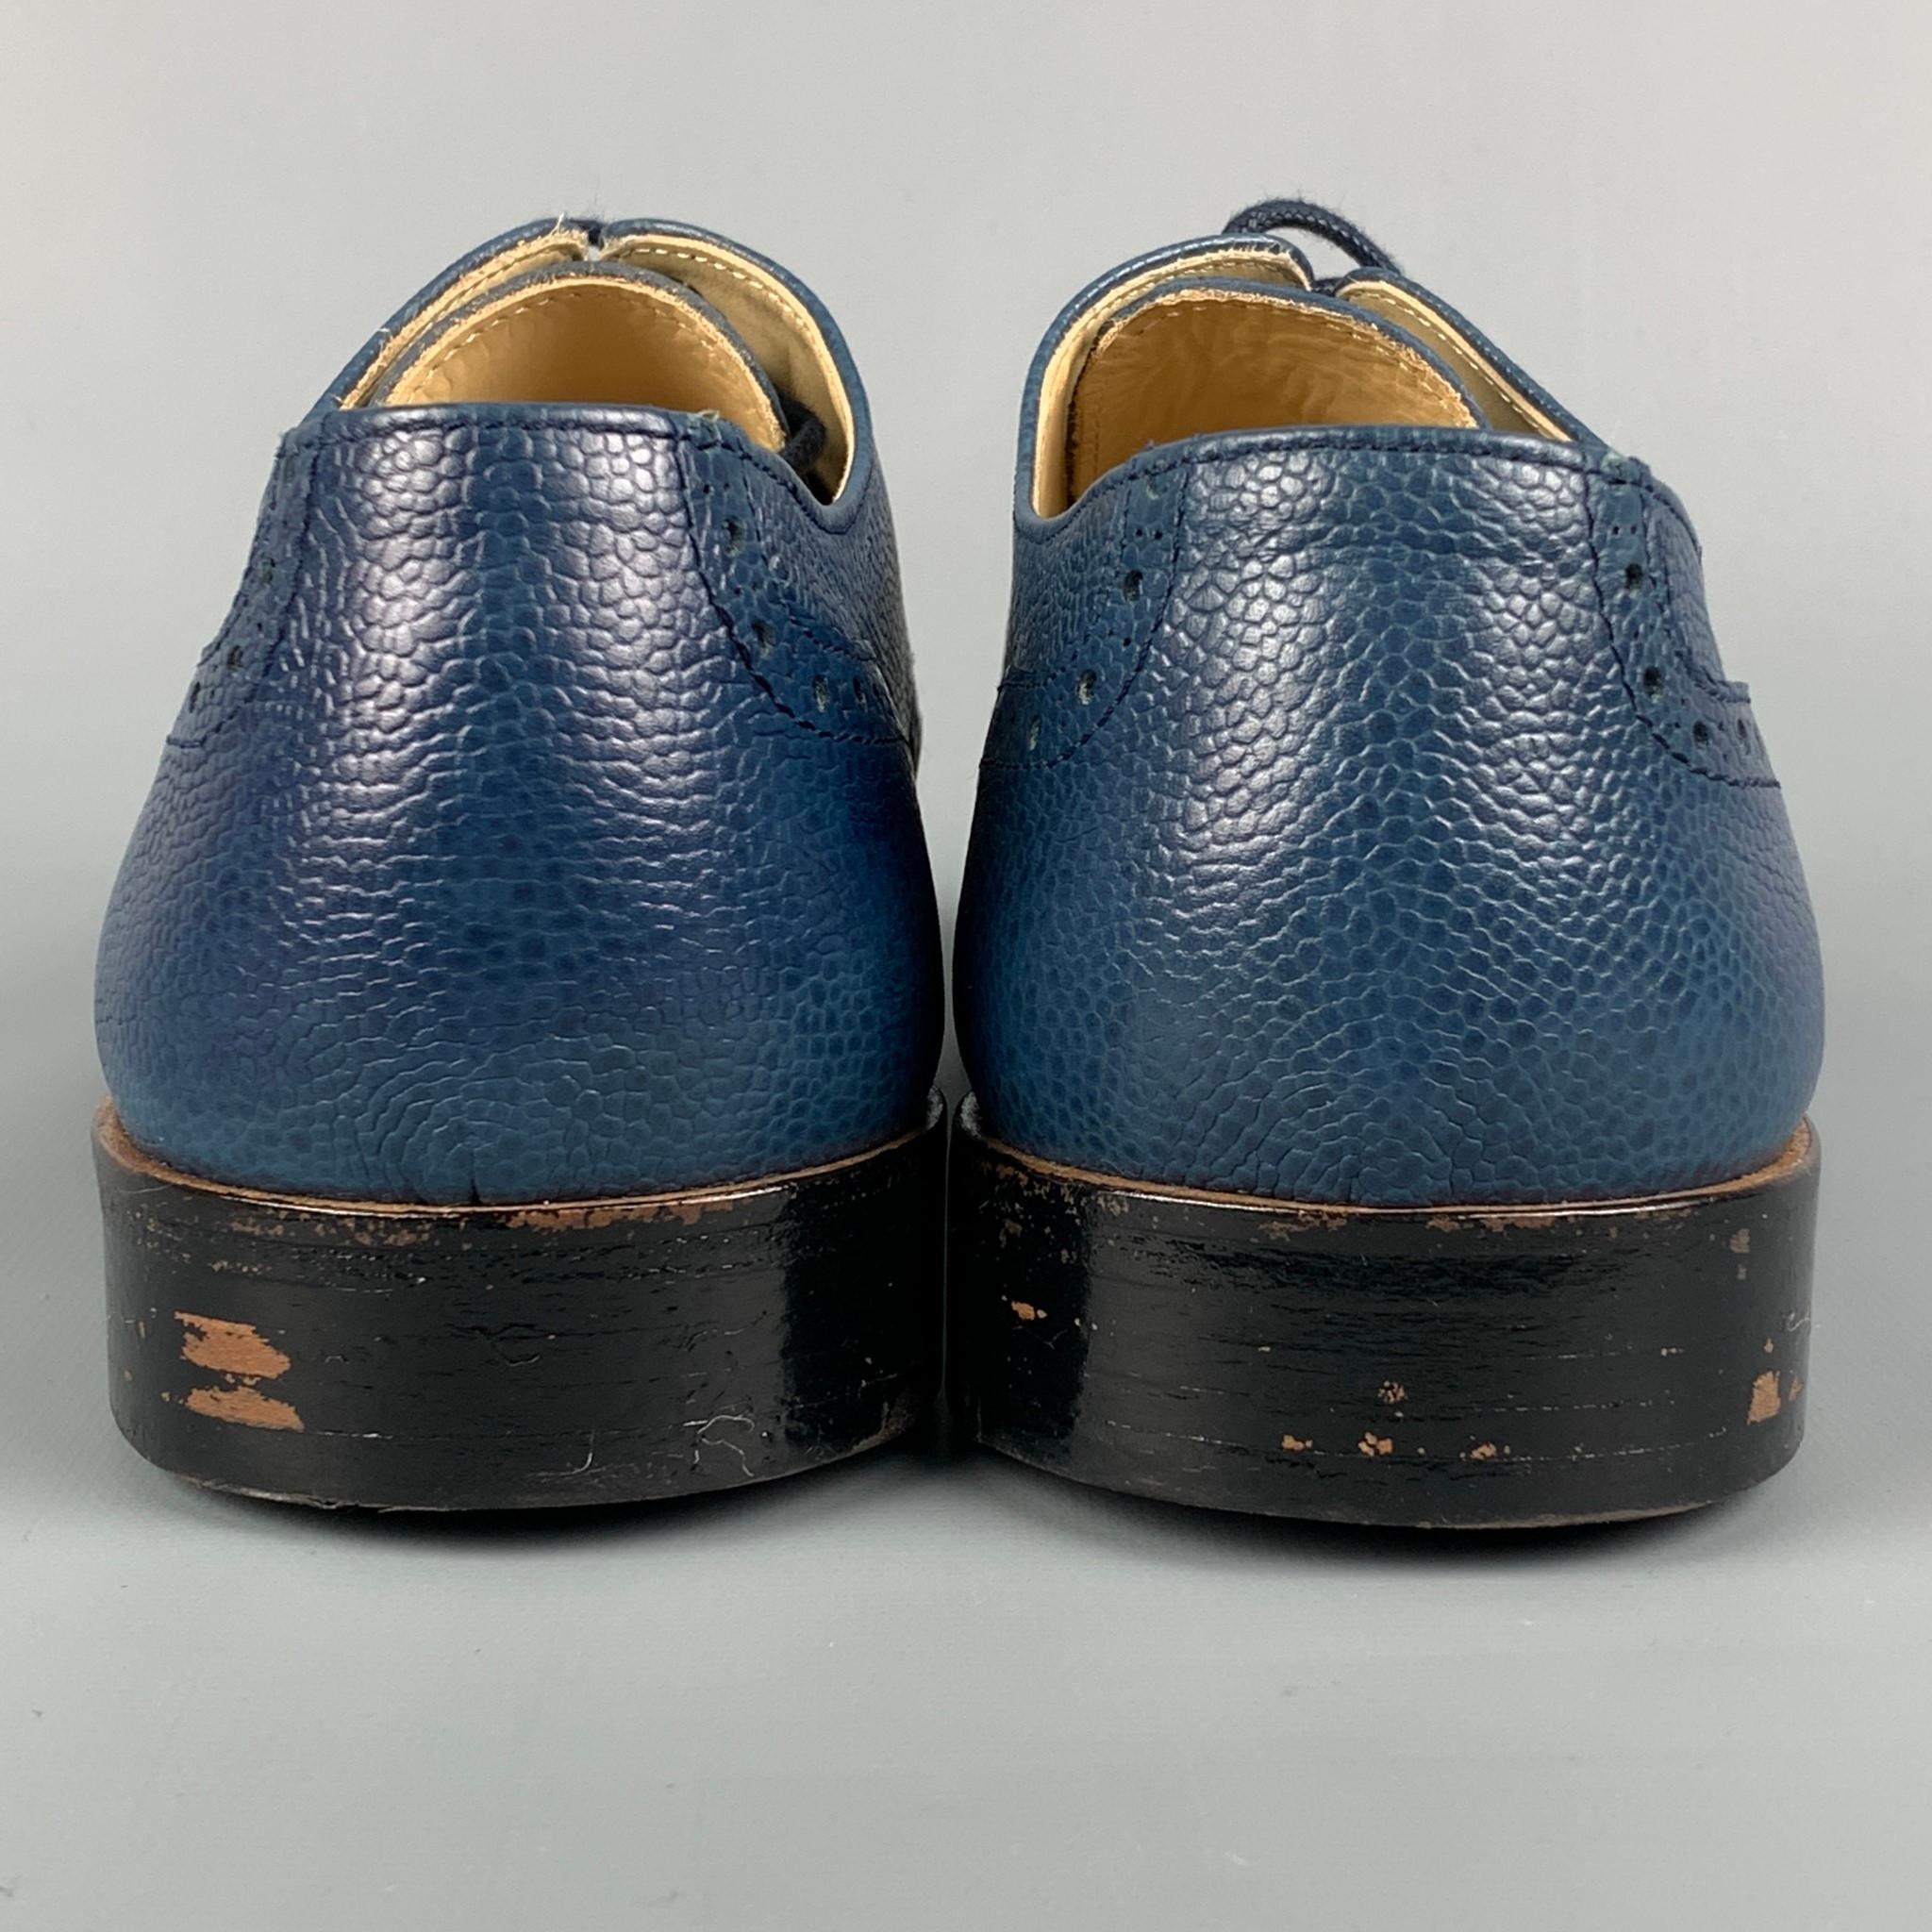 royal blue dress shoes mens